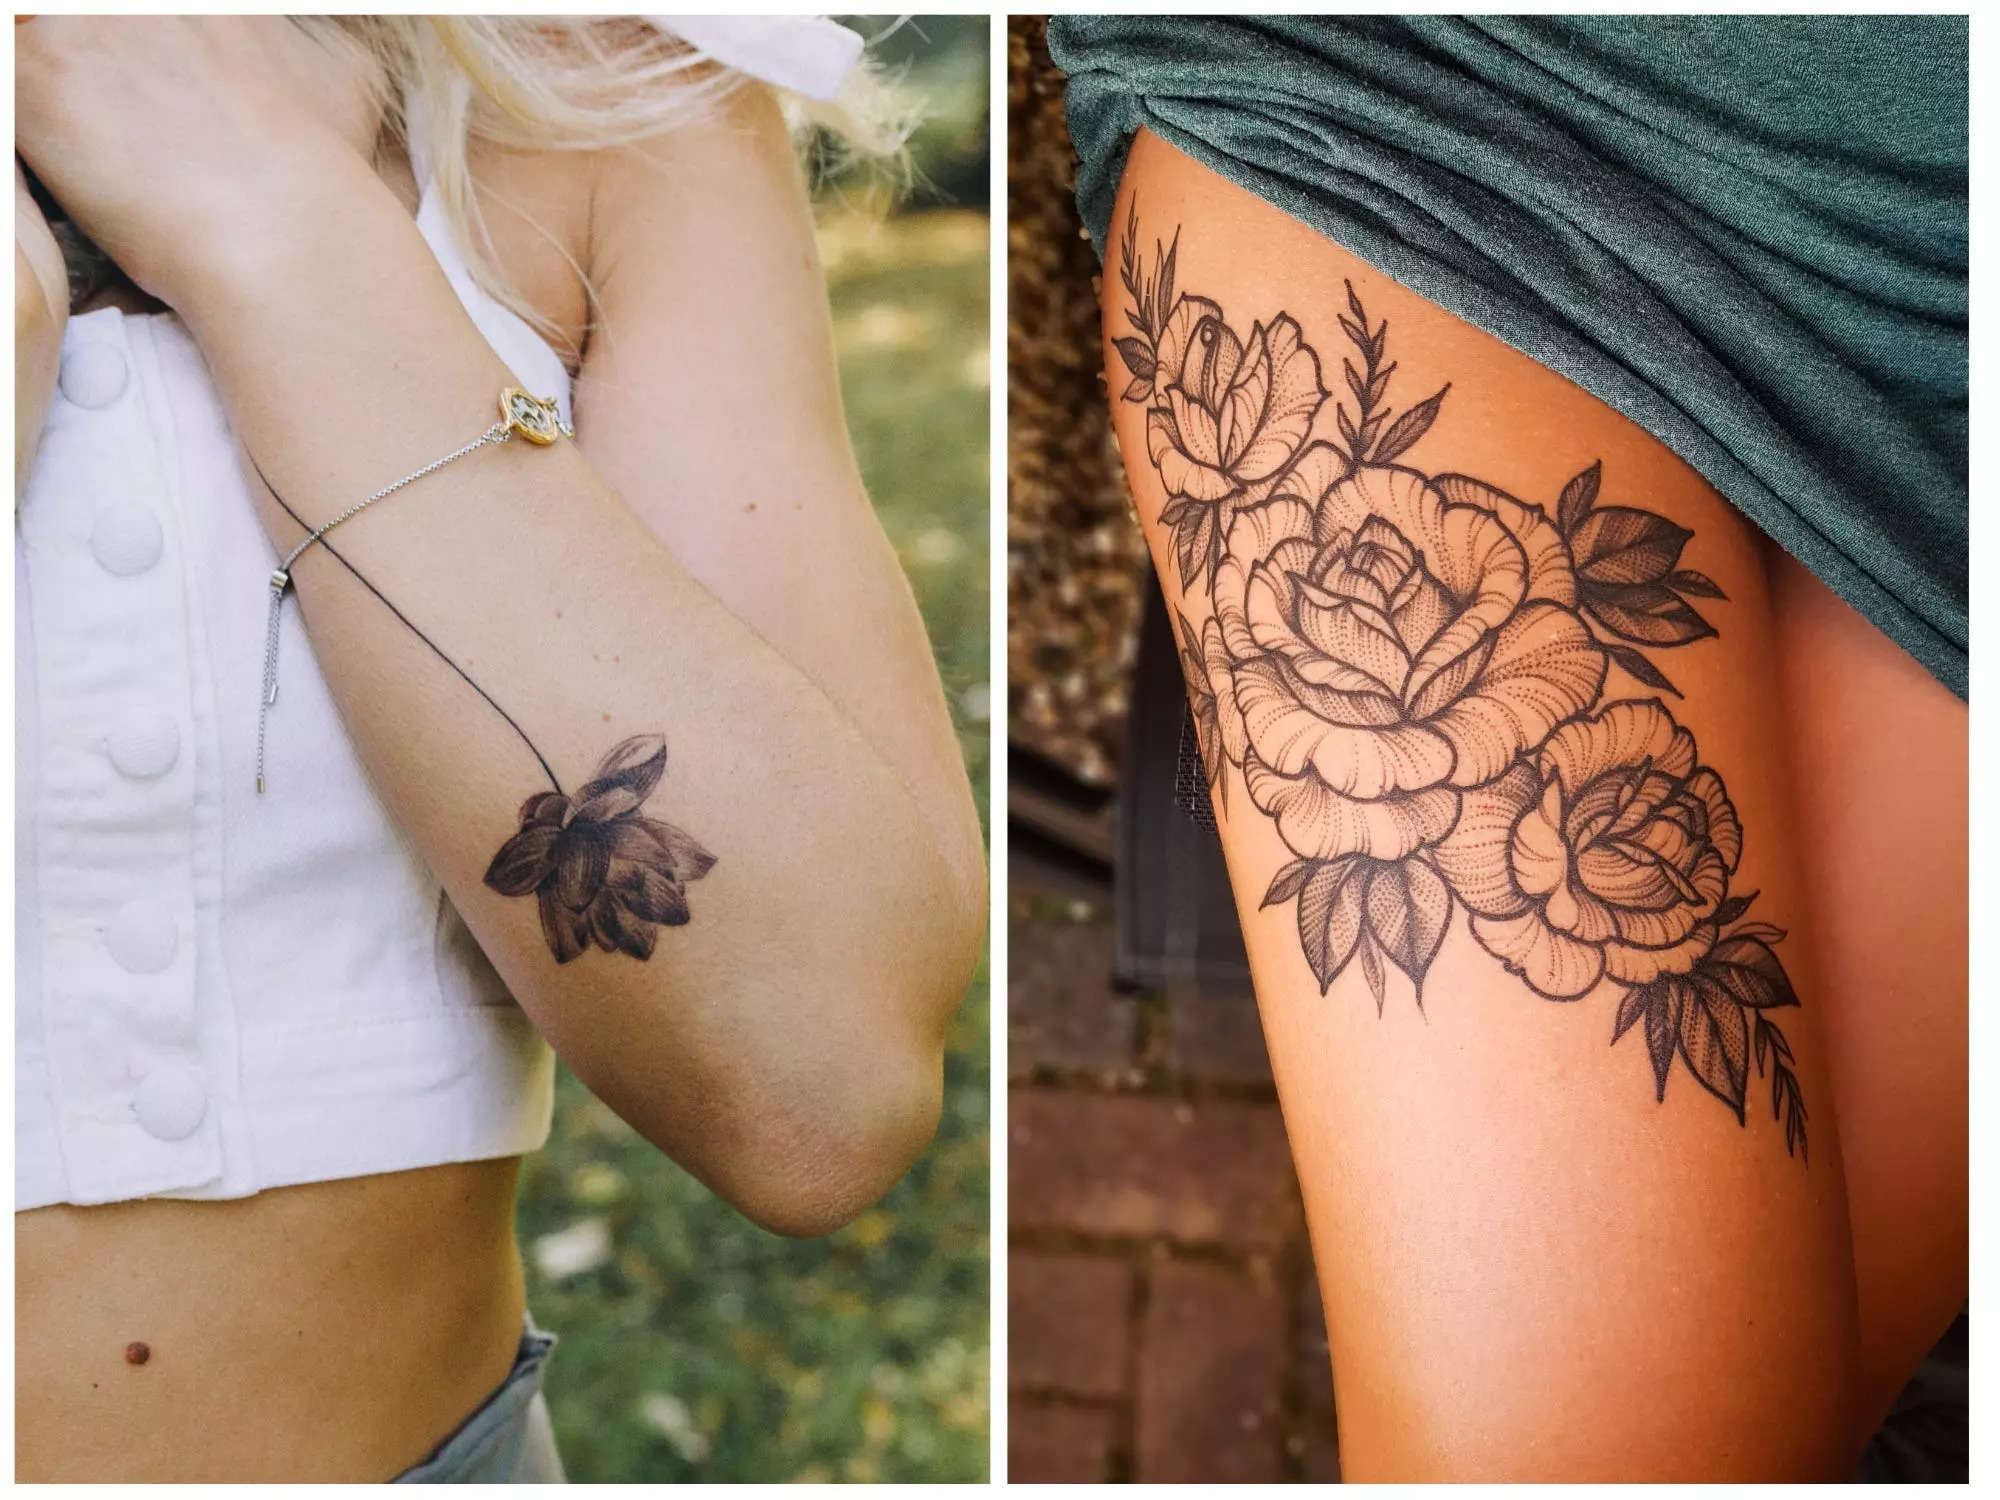 30 Beautiful Flower Tattoos Ideas and Designs